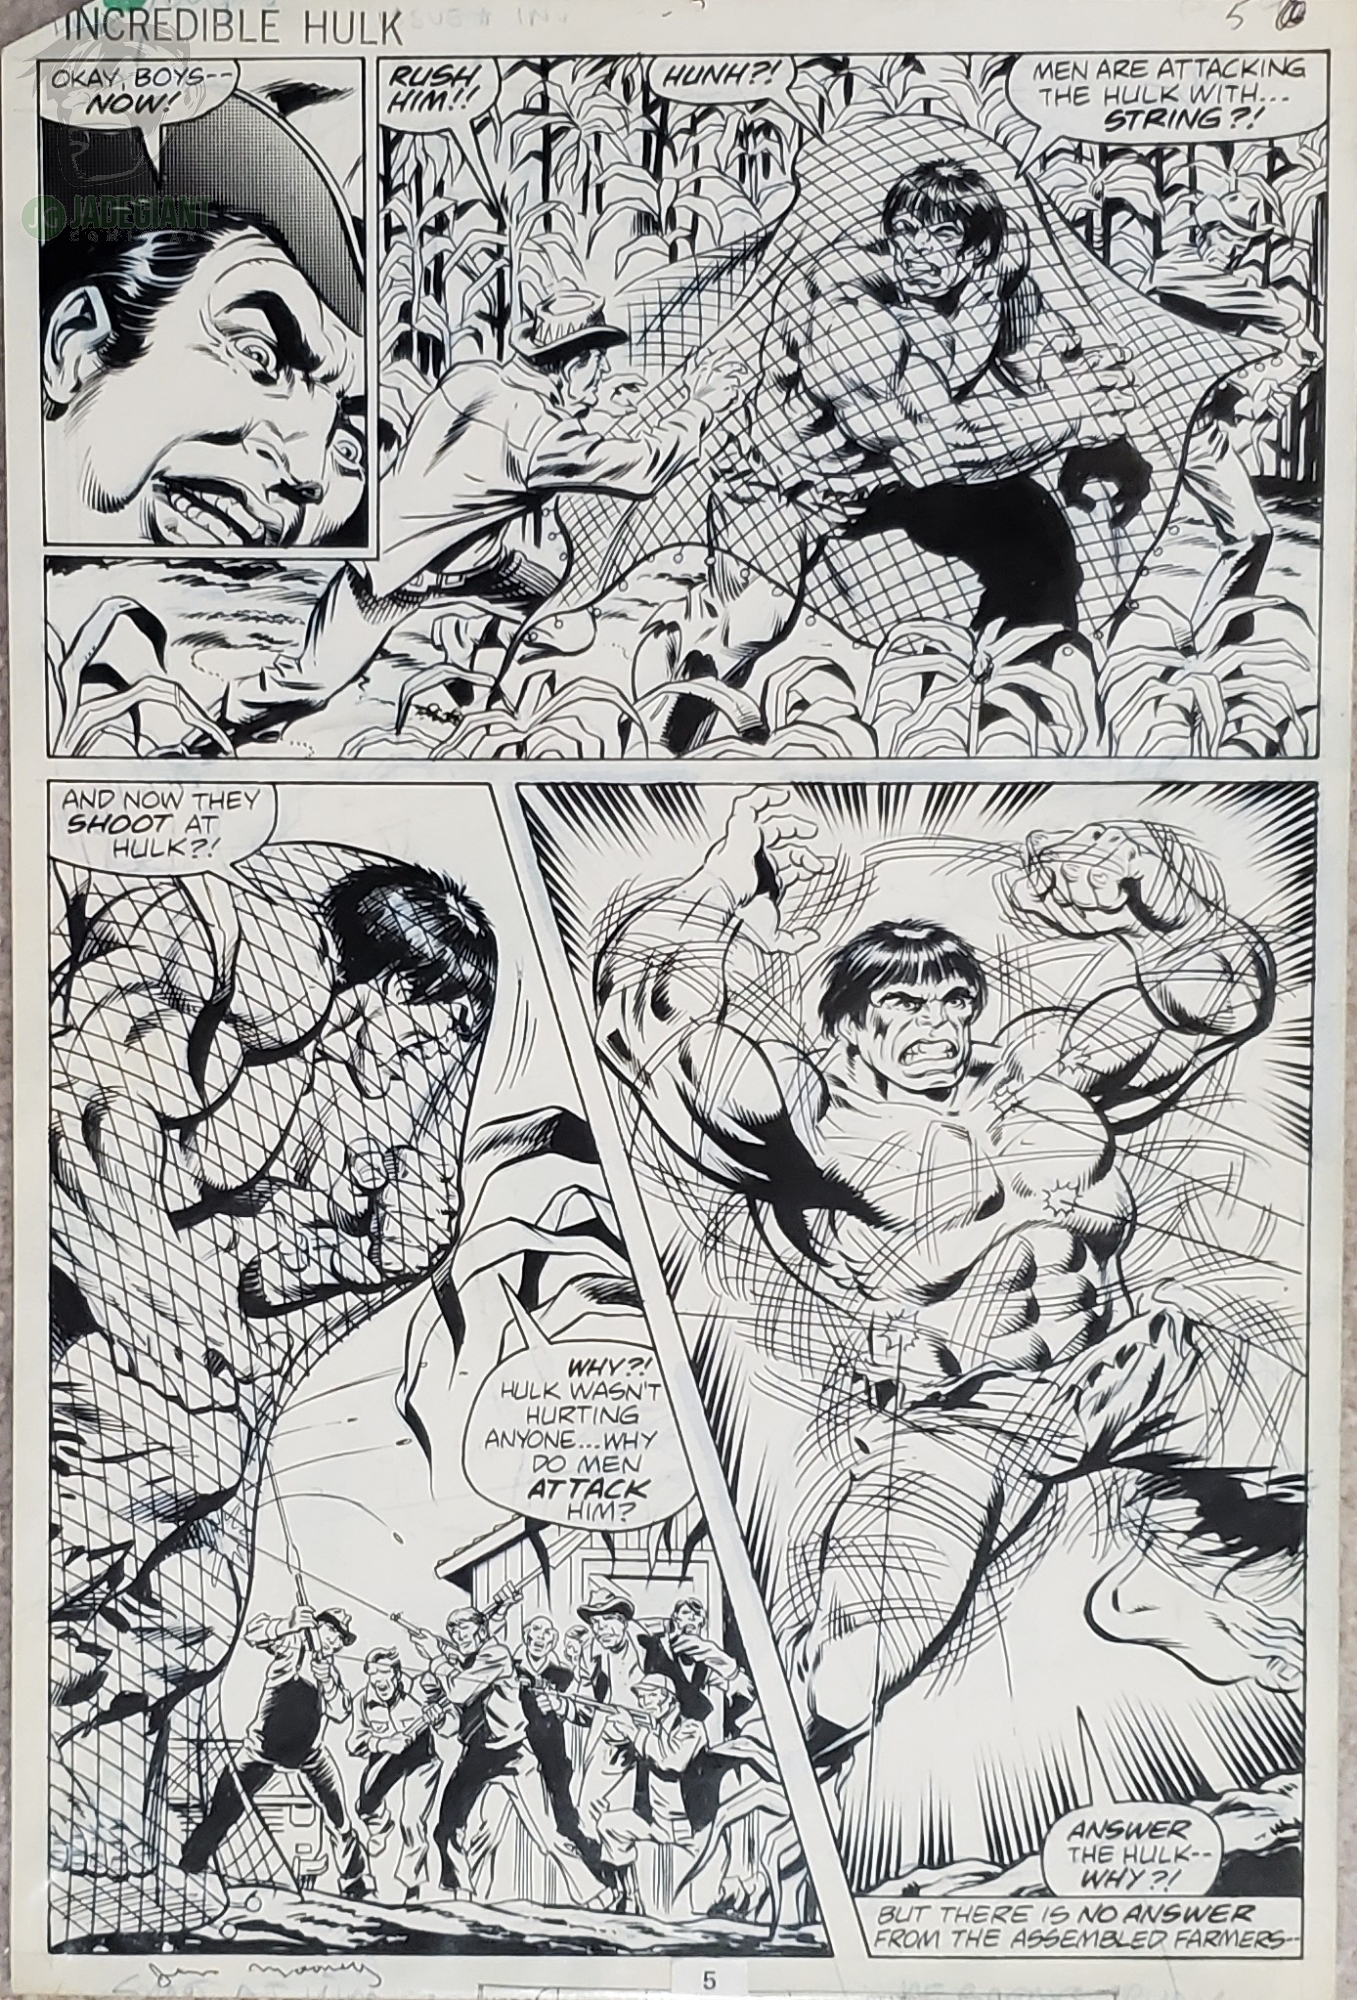 1978 Incredible Hulk 230 page 05 by Jim Mooney and Bob Layton Comic Art